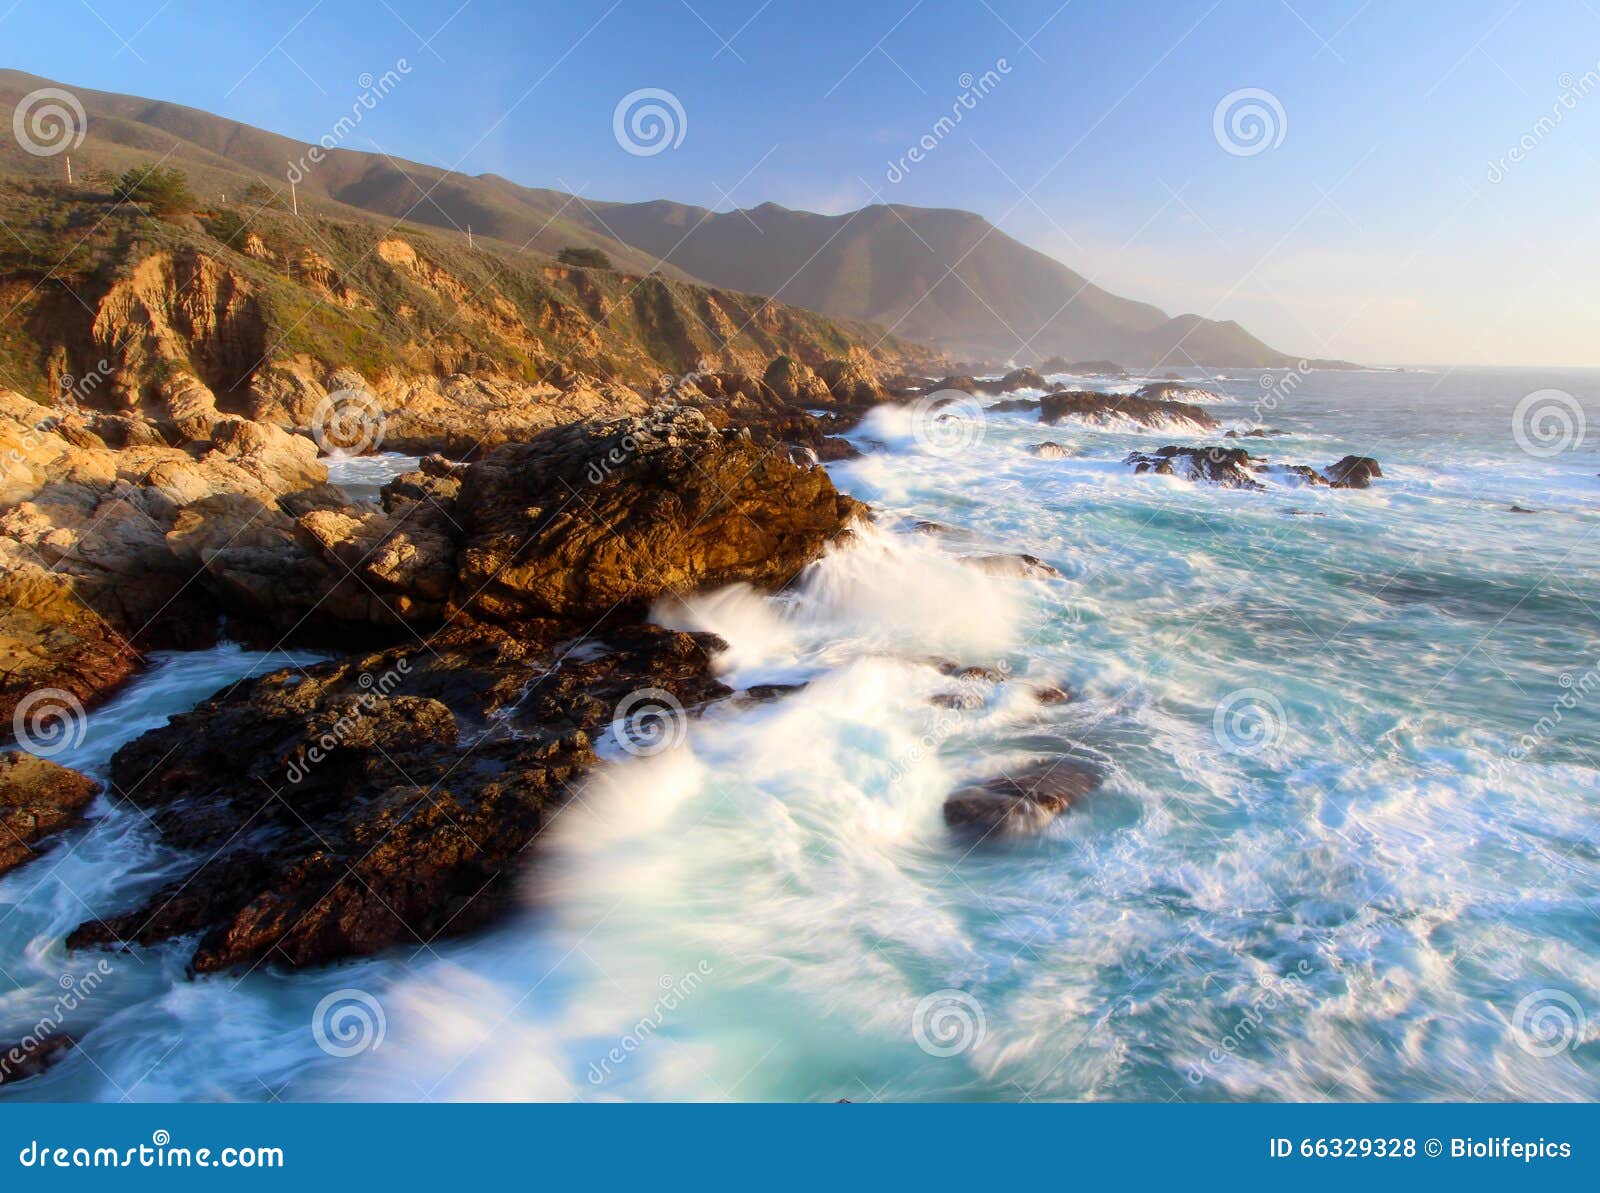 crashing waves at sunset on big sur coast, garapata state park, near monterey, california, usa